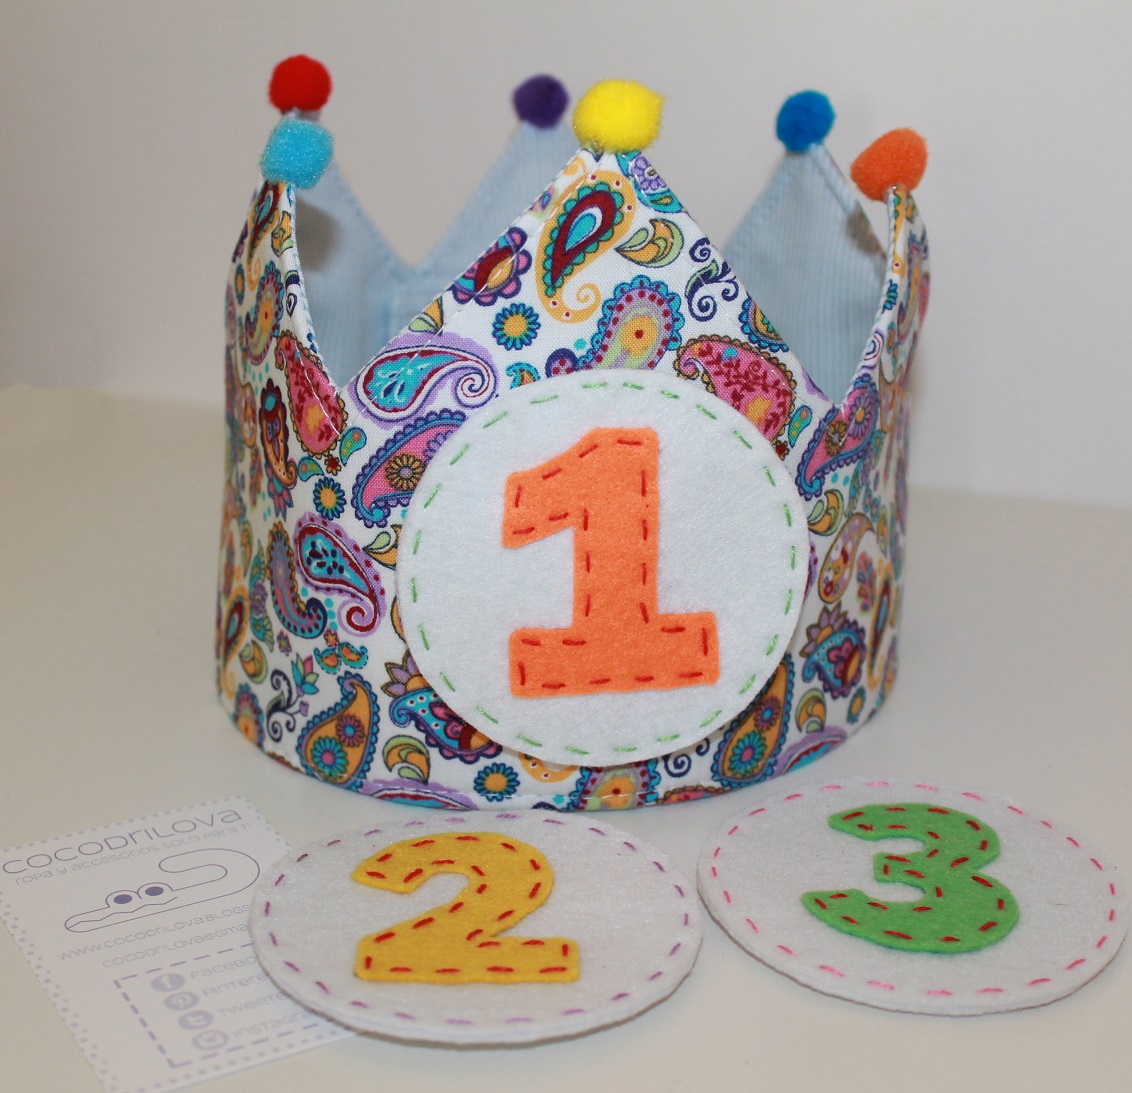 cocodrilova: corona de cumpleaños 1 2 3